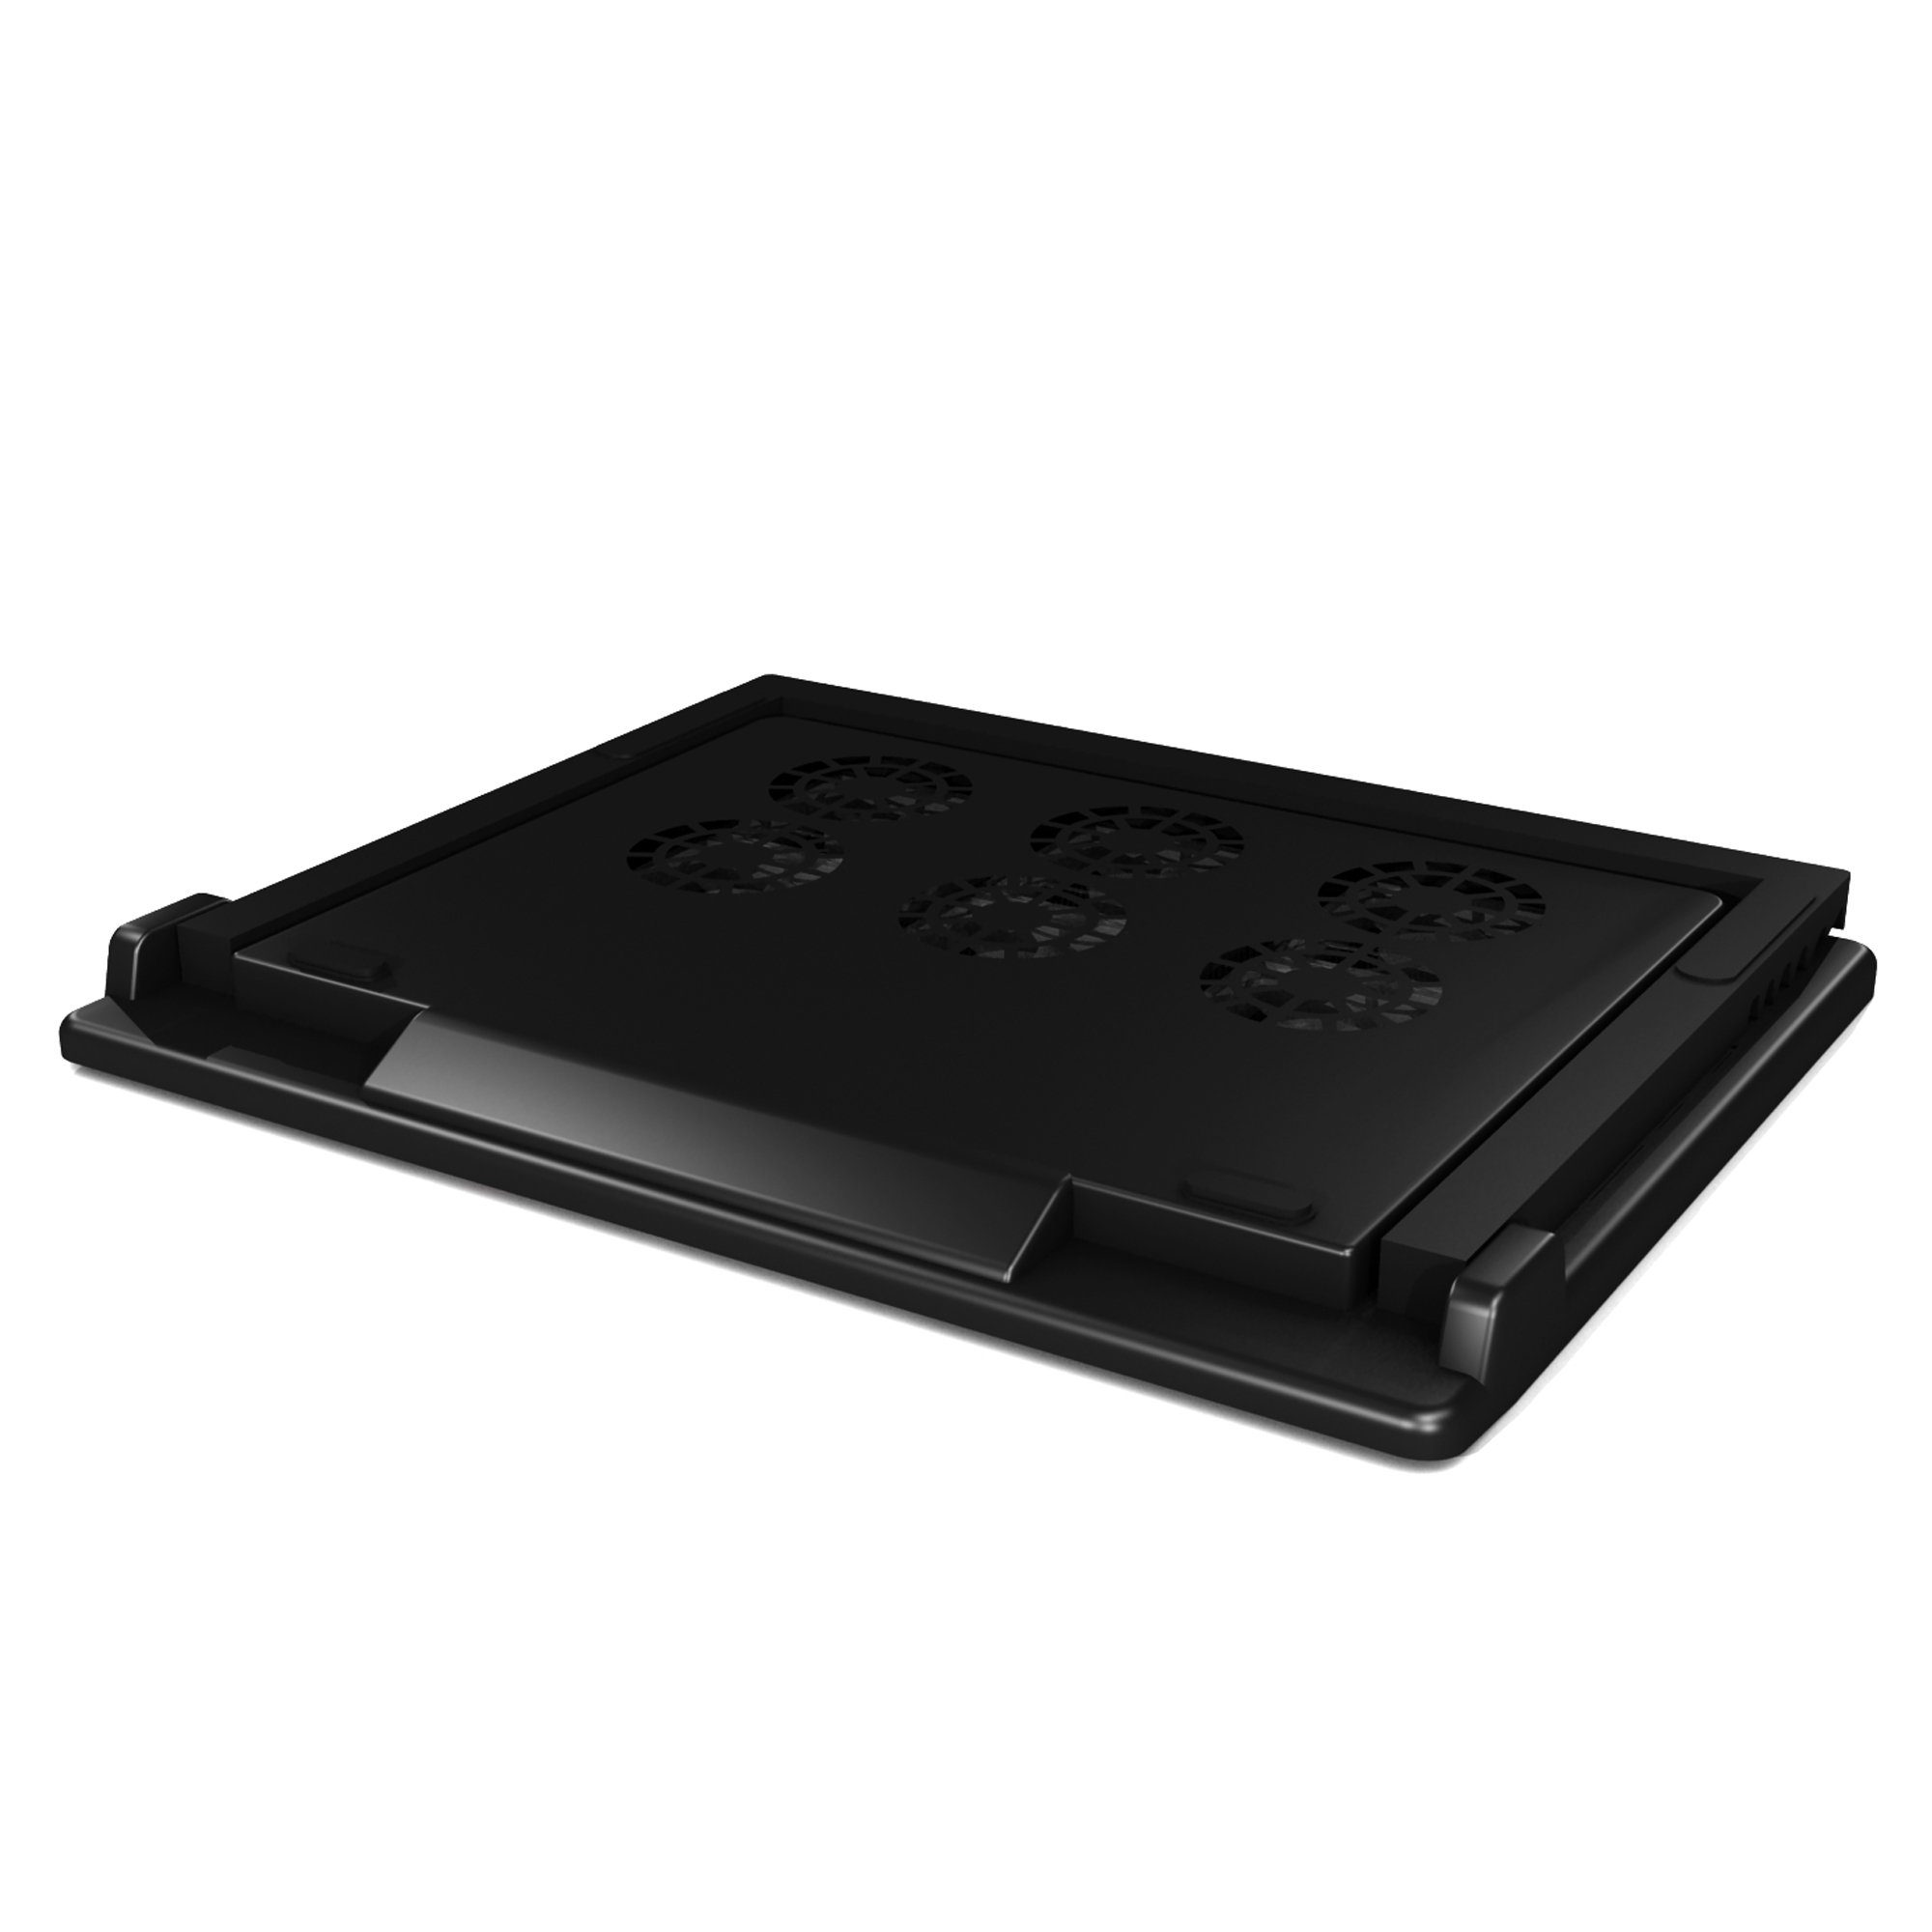 INCA Notebook-Kühler Notebookkühler für Lüfter 7-17-Zoll-Laptops 6x70mm Laptopkühler